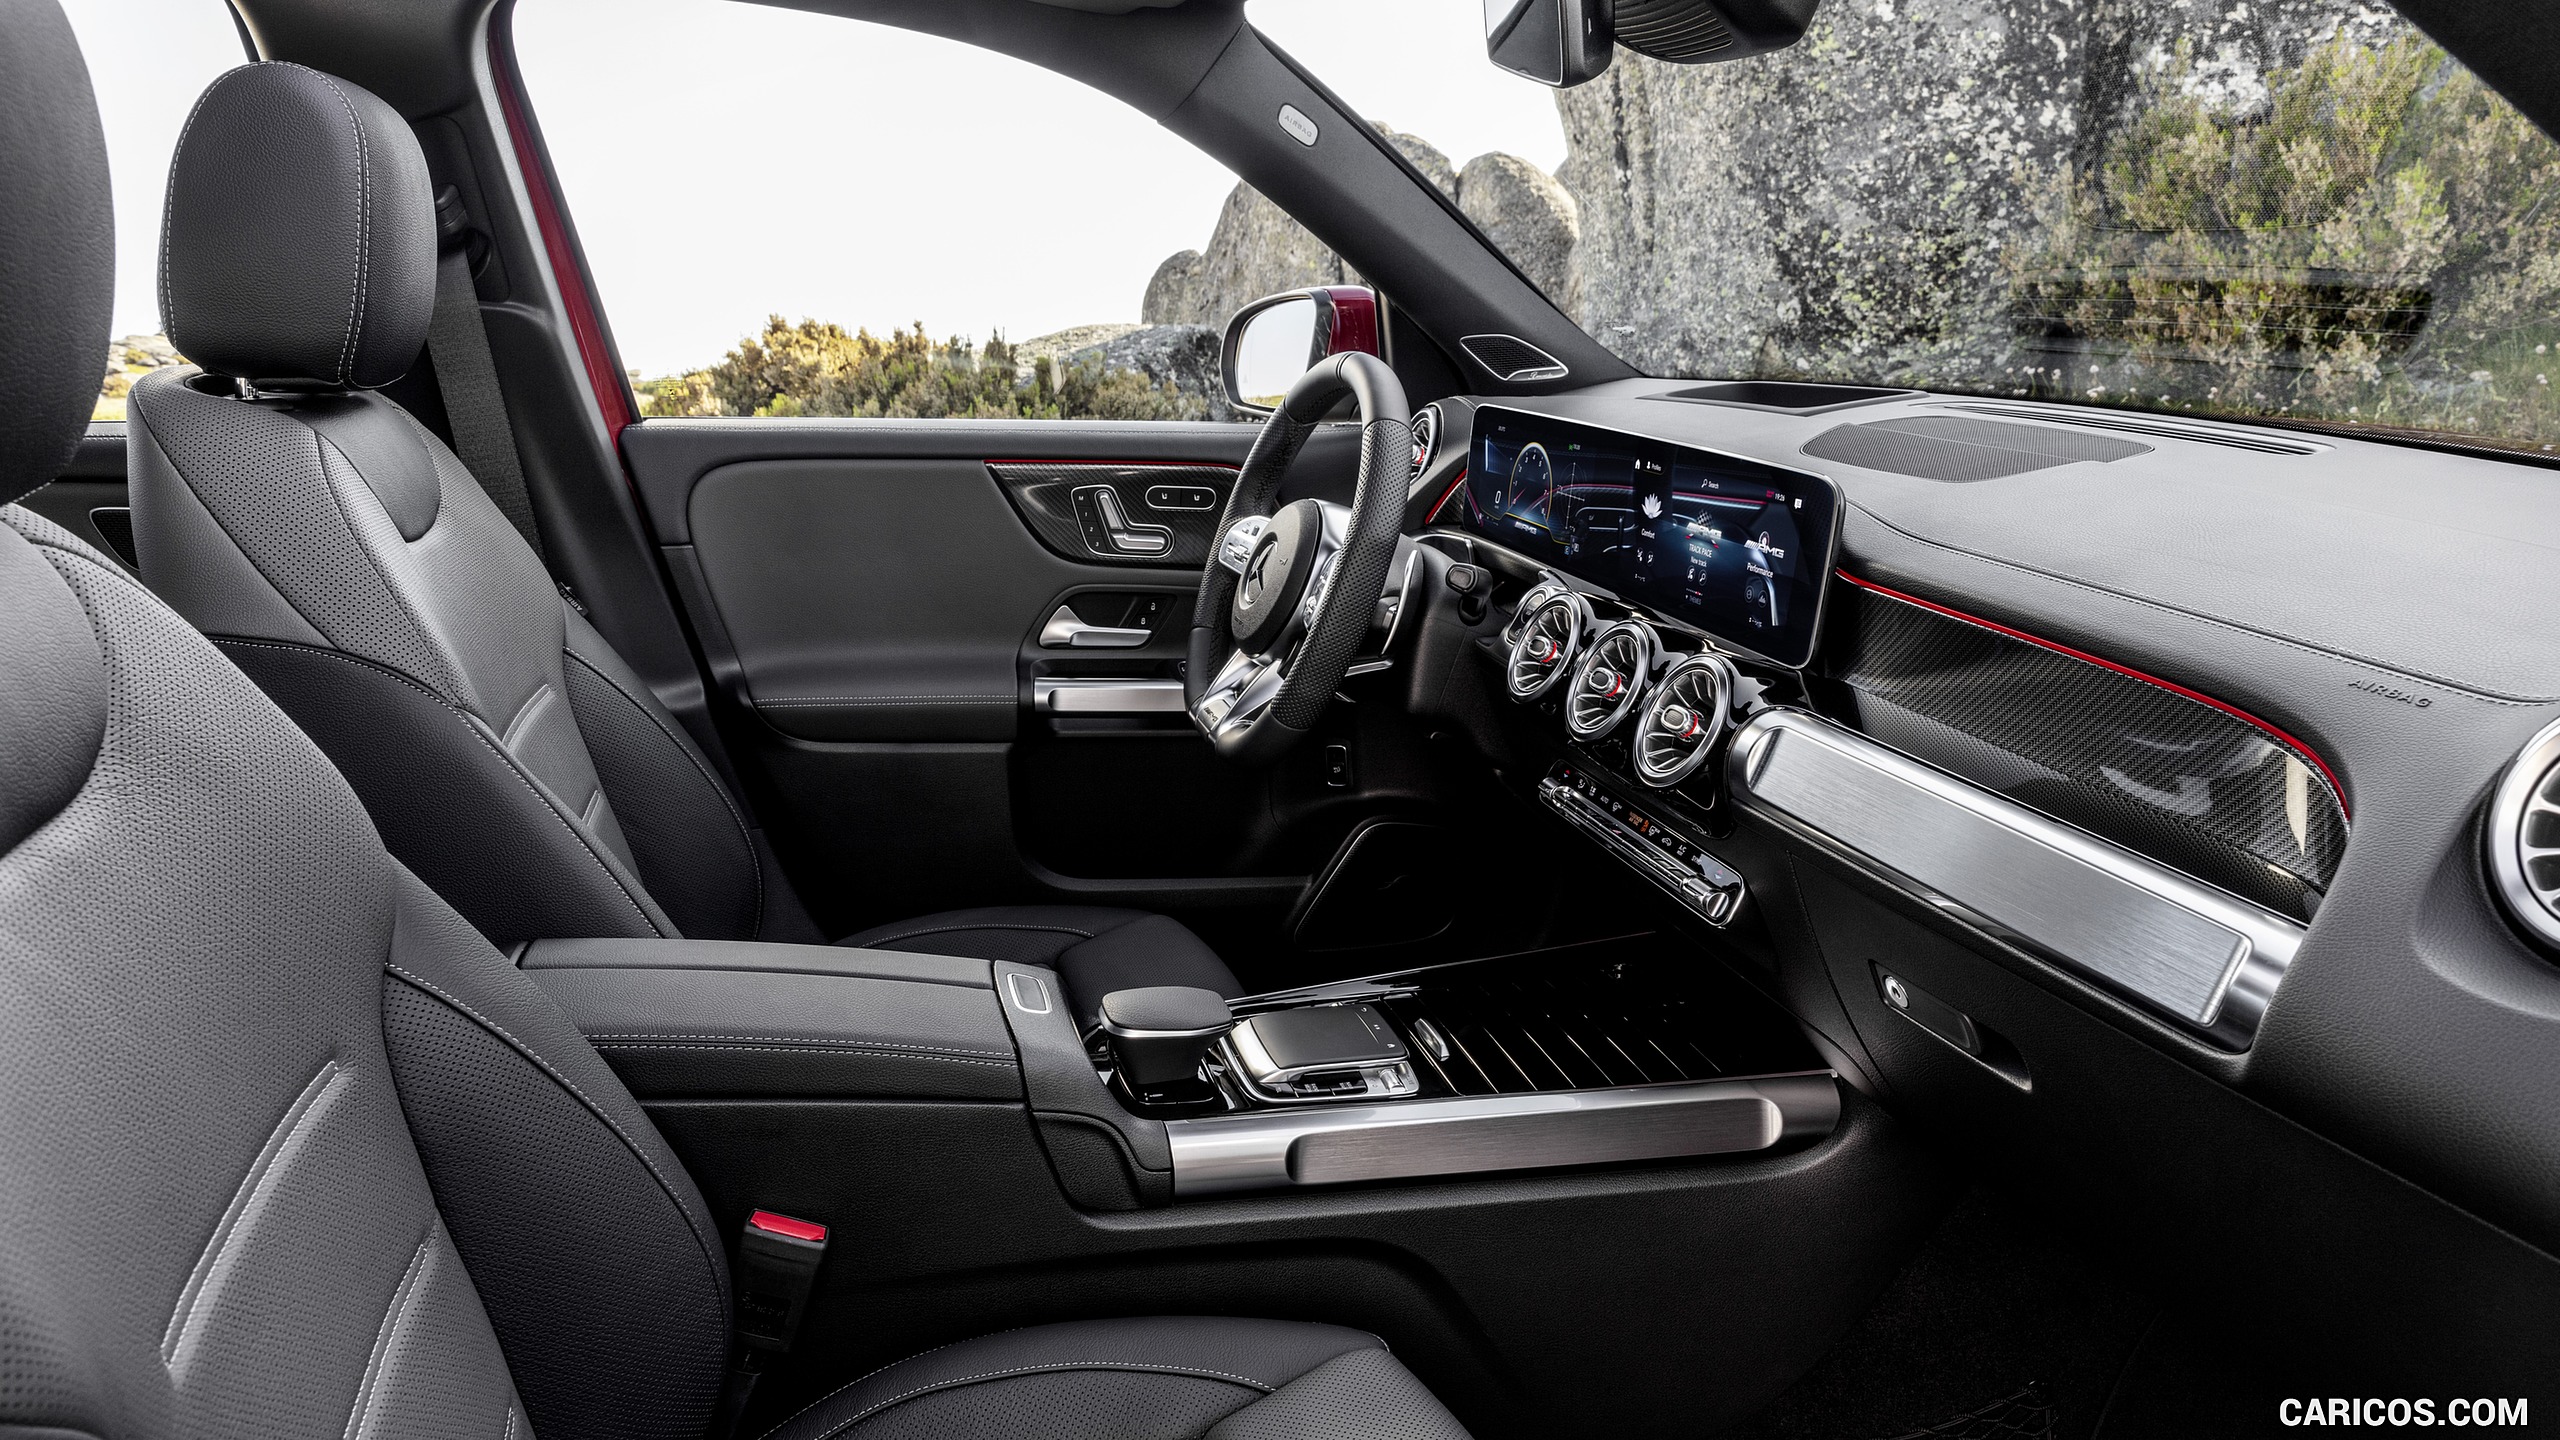 2021 Mercedes-AMG GLB 35 4MATIC - Interior, Front Seats, #26 of 95